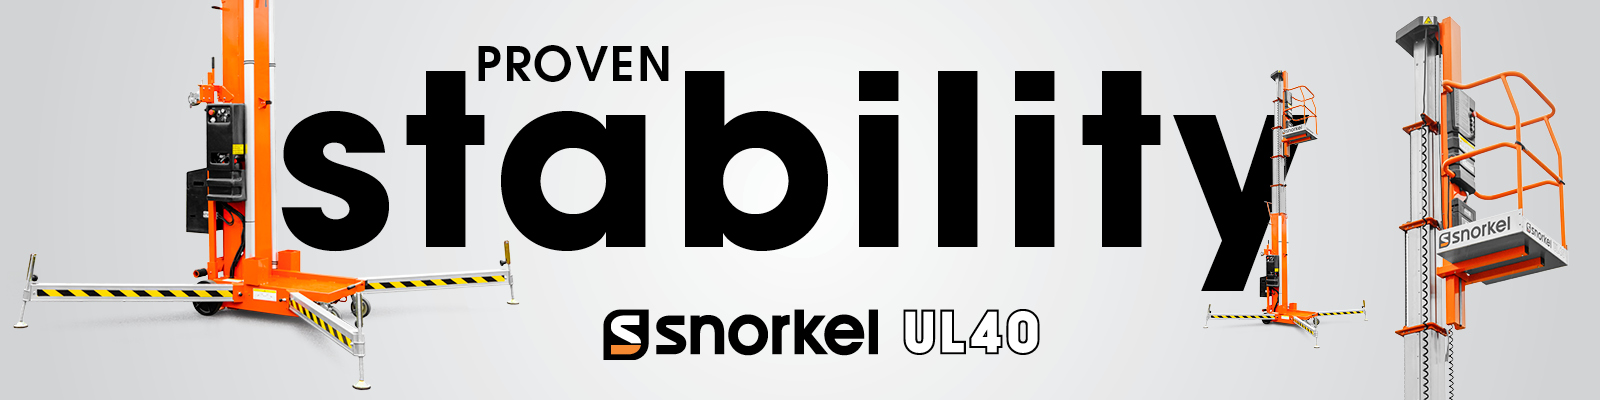 Proven Stability - Snorkel UL40 push-around mast lift